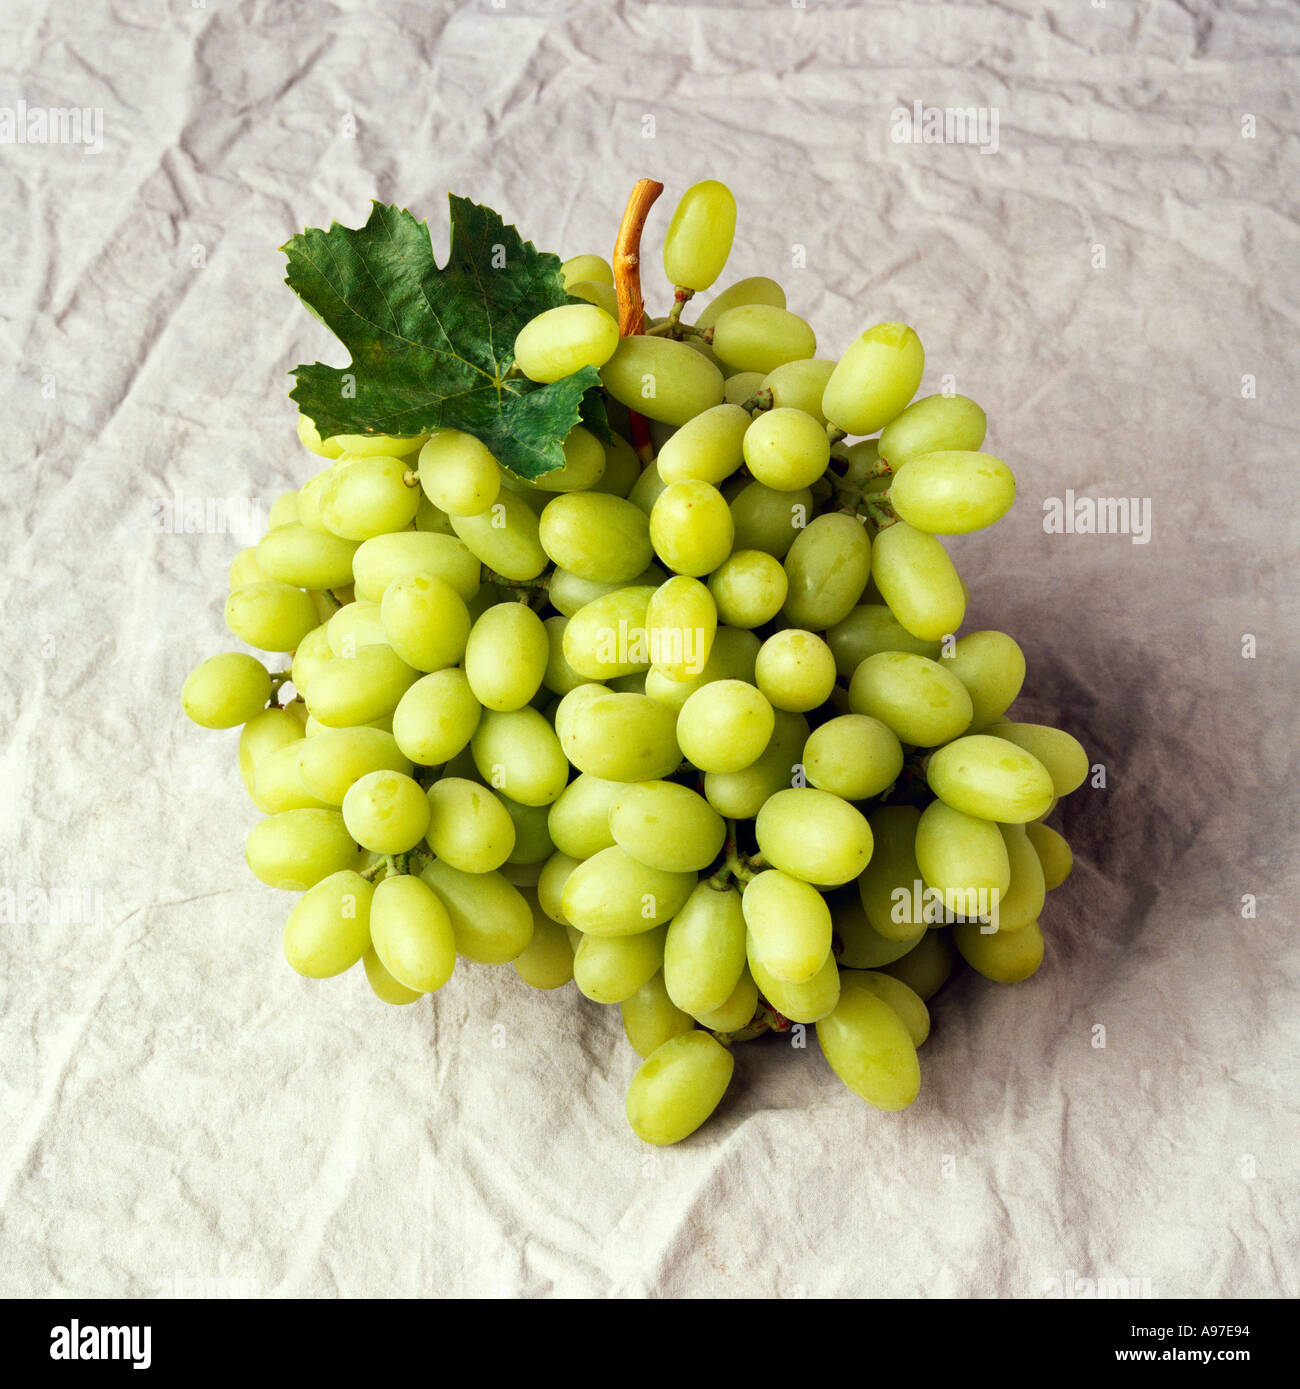 https://c8.alamy.com/comp/A97E94/agriculture-thompson-seedless-green-table-grape-bunch-on-a-grey-canvas-A97E94.jpg